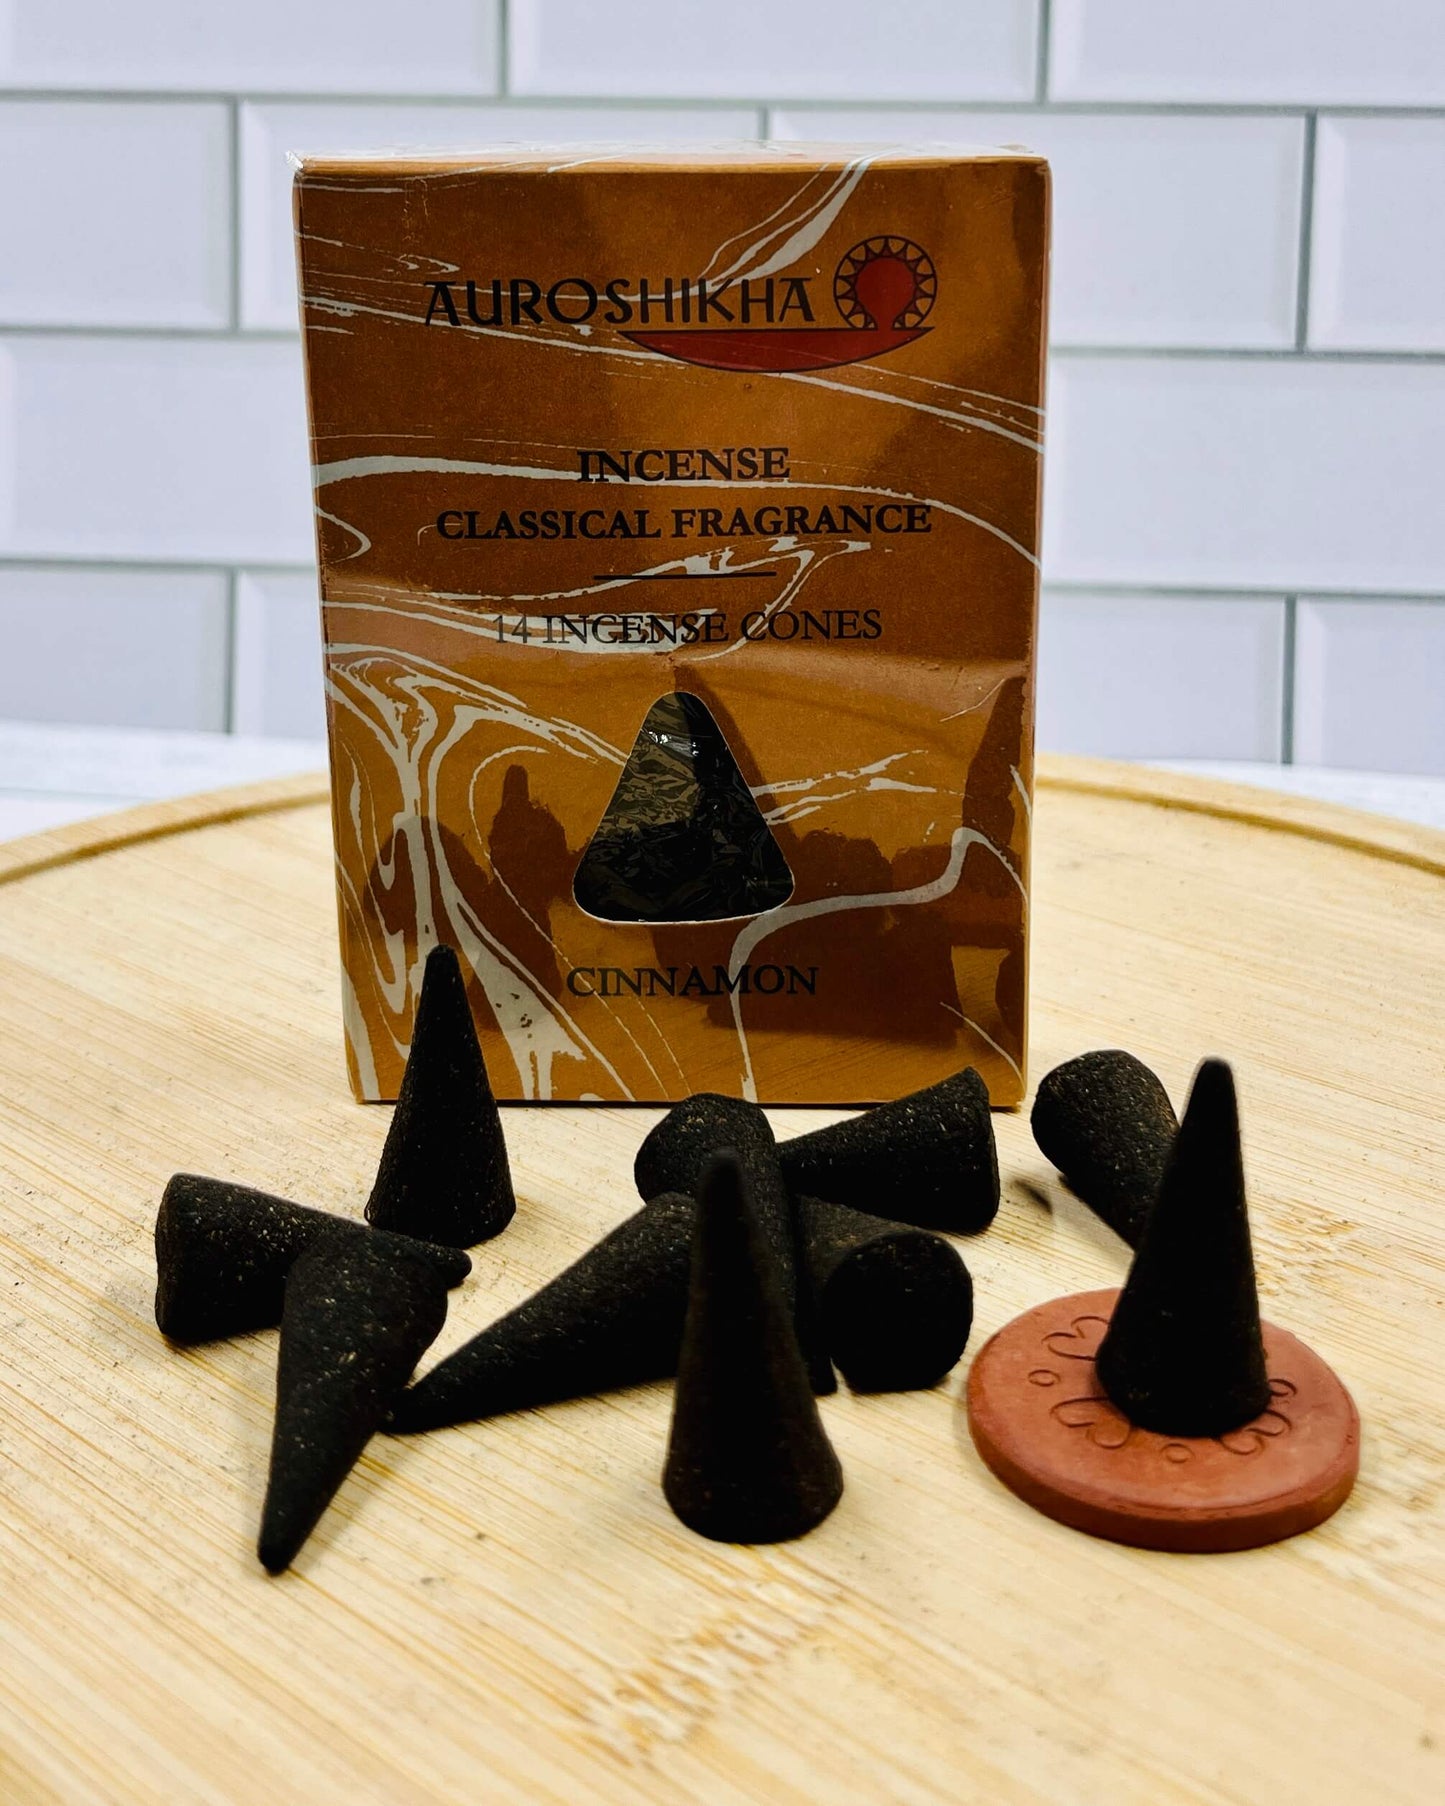 Auroshikha Cones Cinnamon